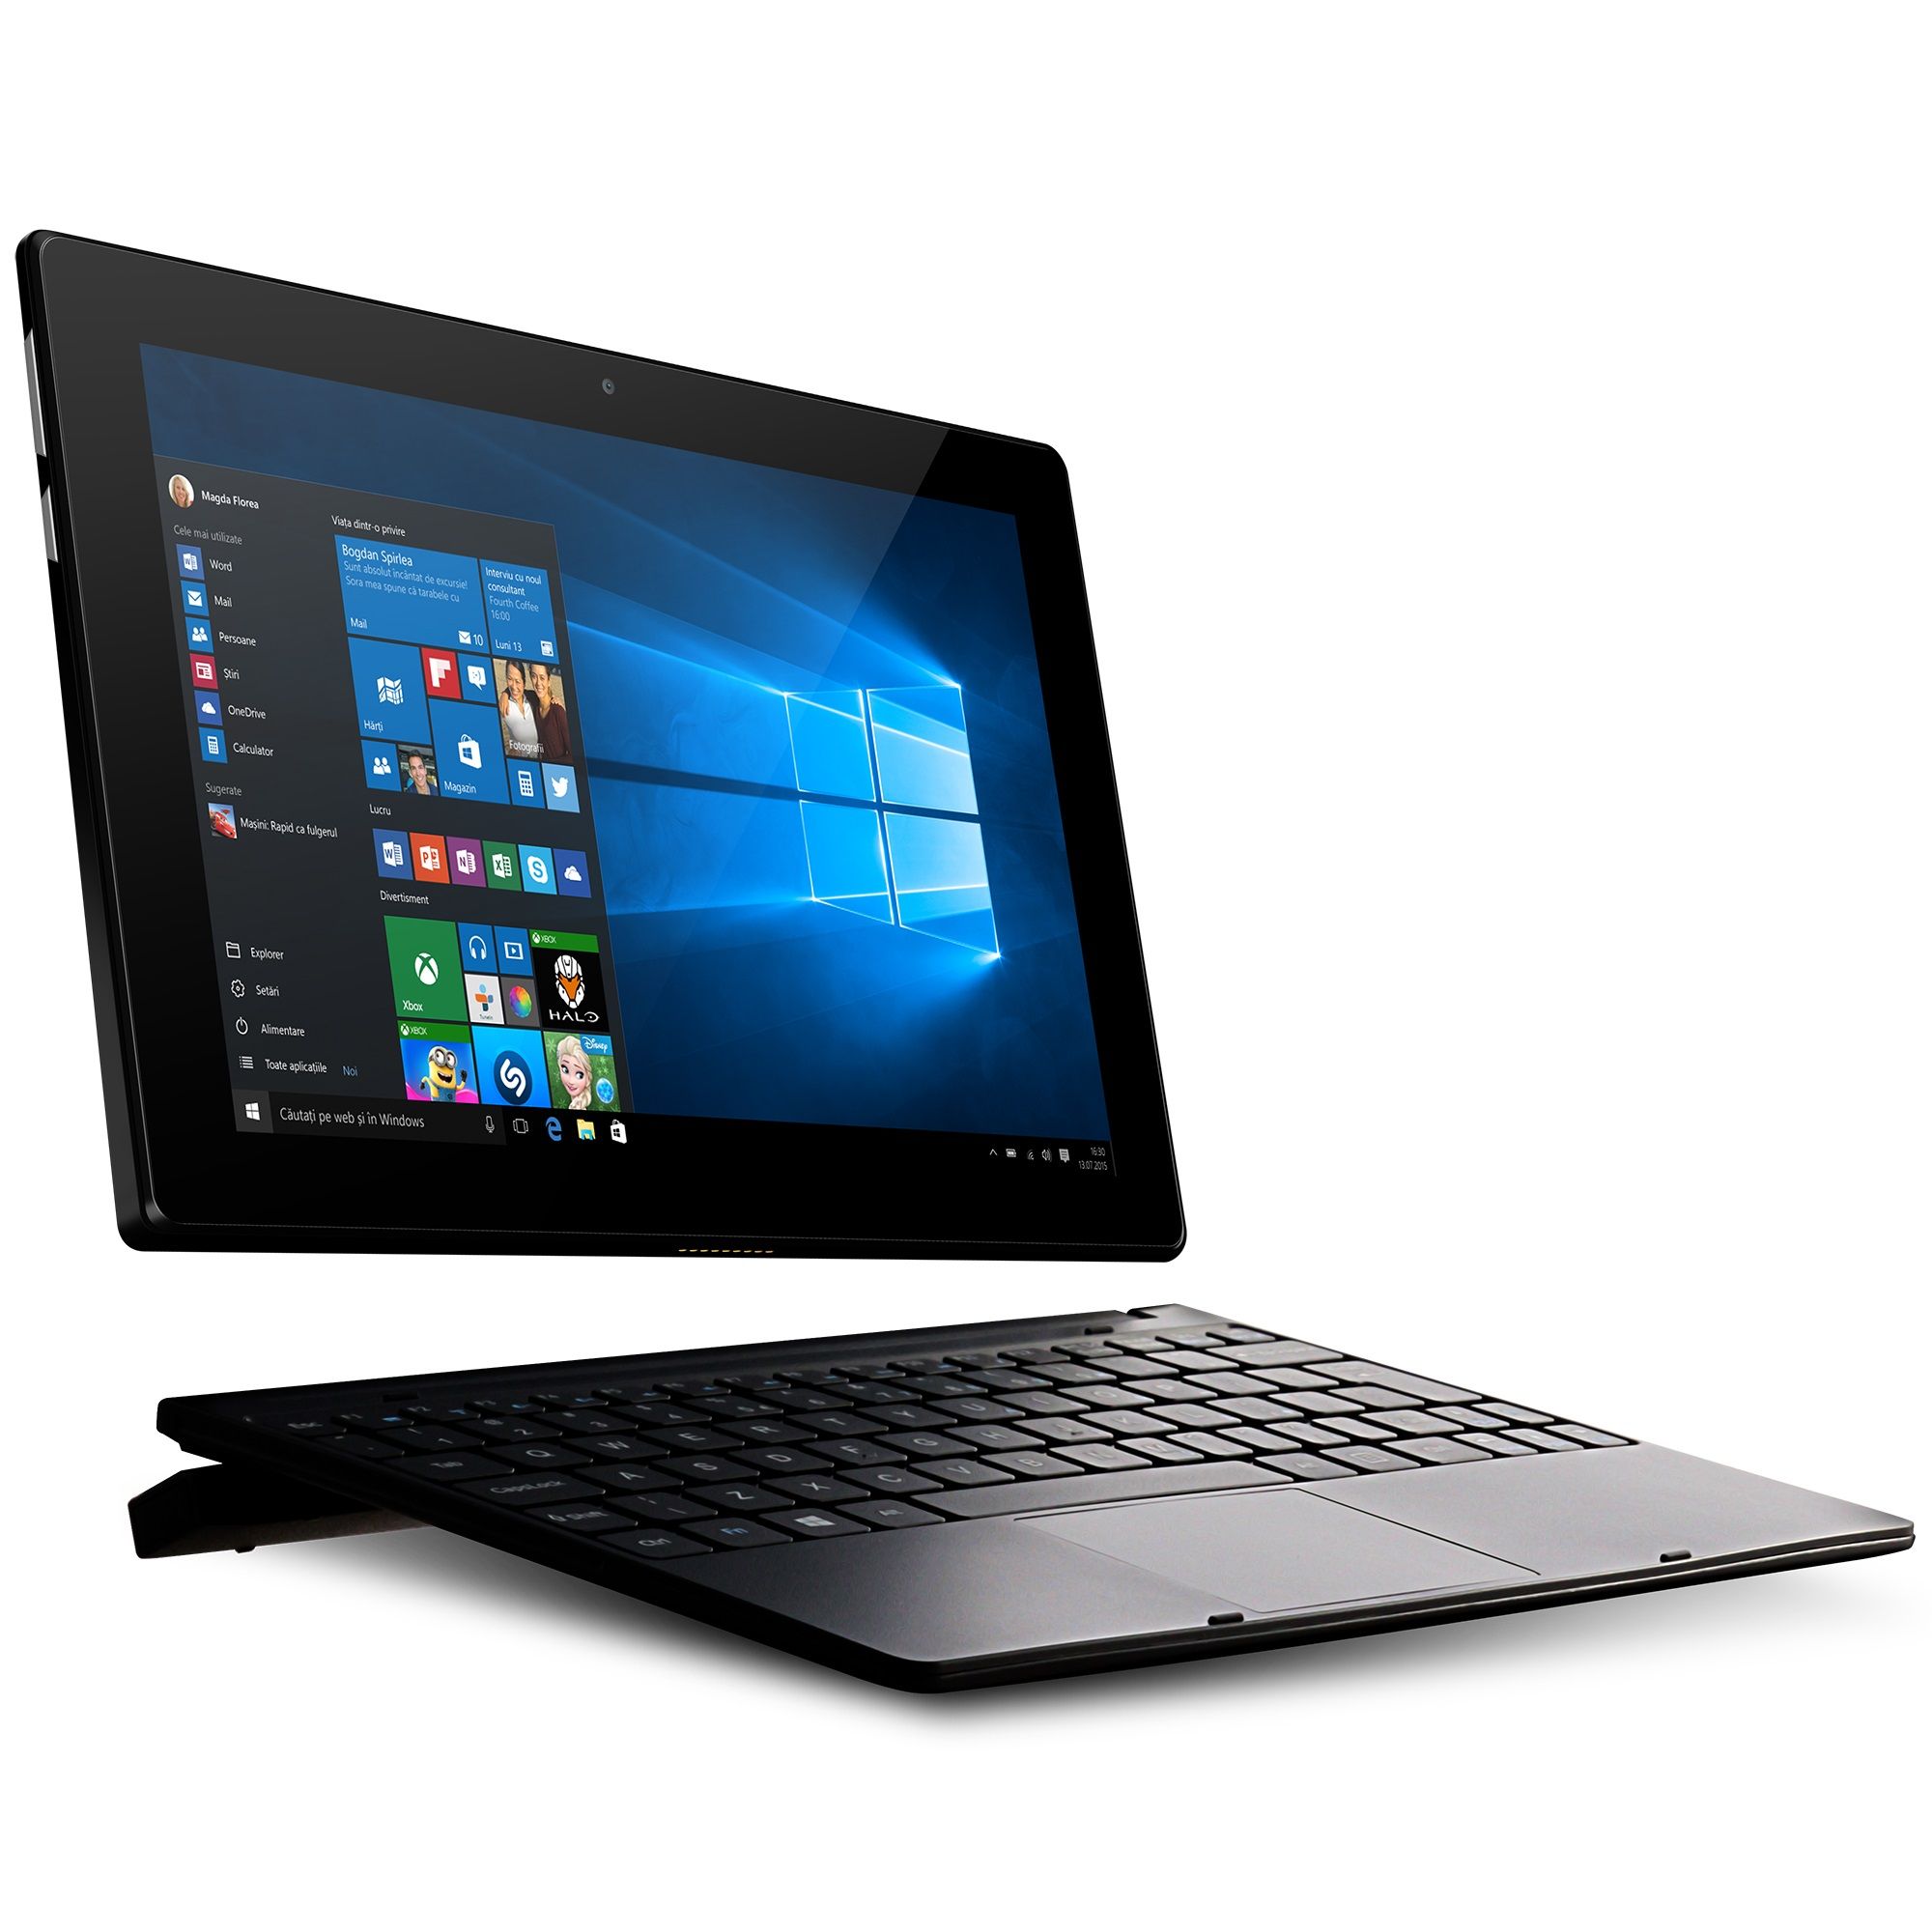  Laptop 2 in 1 Allview Wi10N Pro, Intel Z3735F, 2GB DDR3, HDD 32GB, Windows 10 